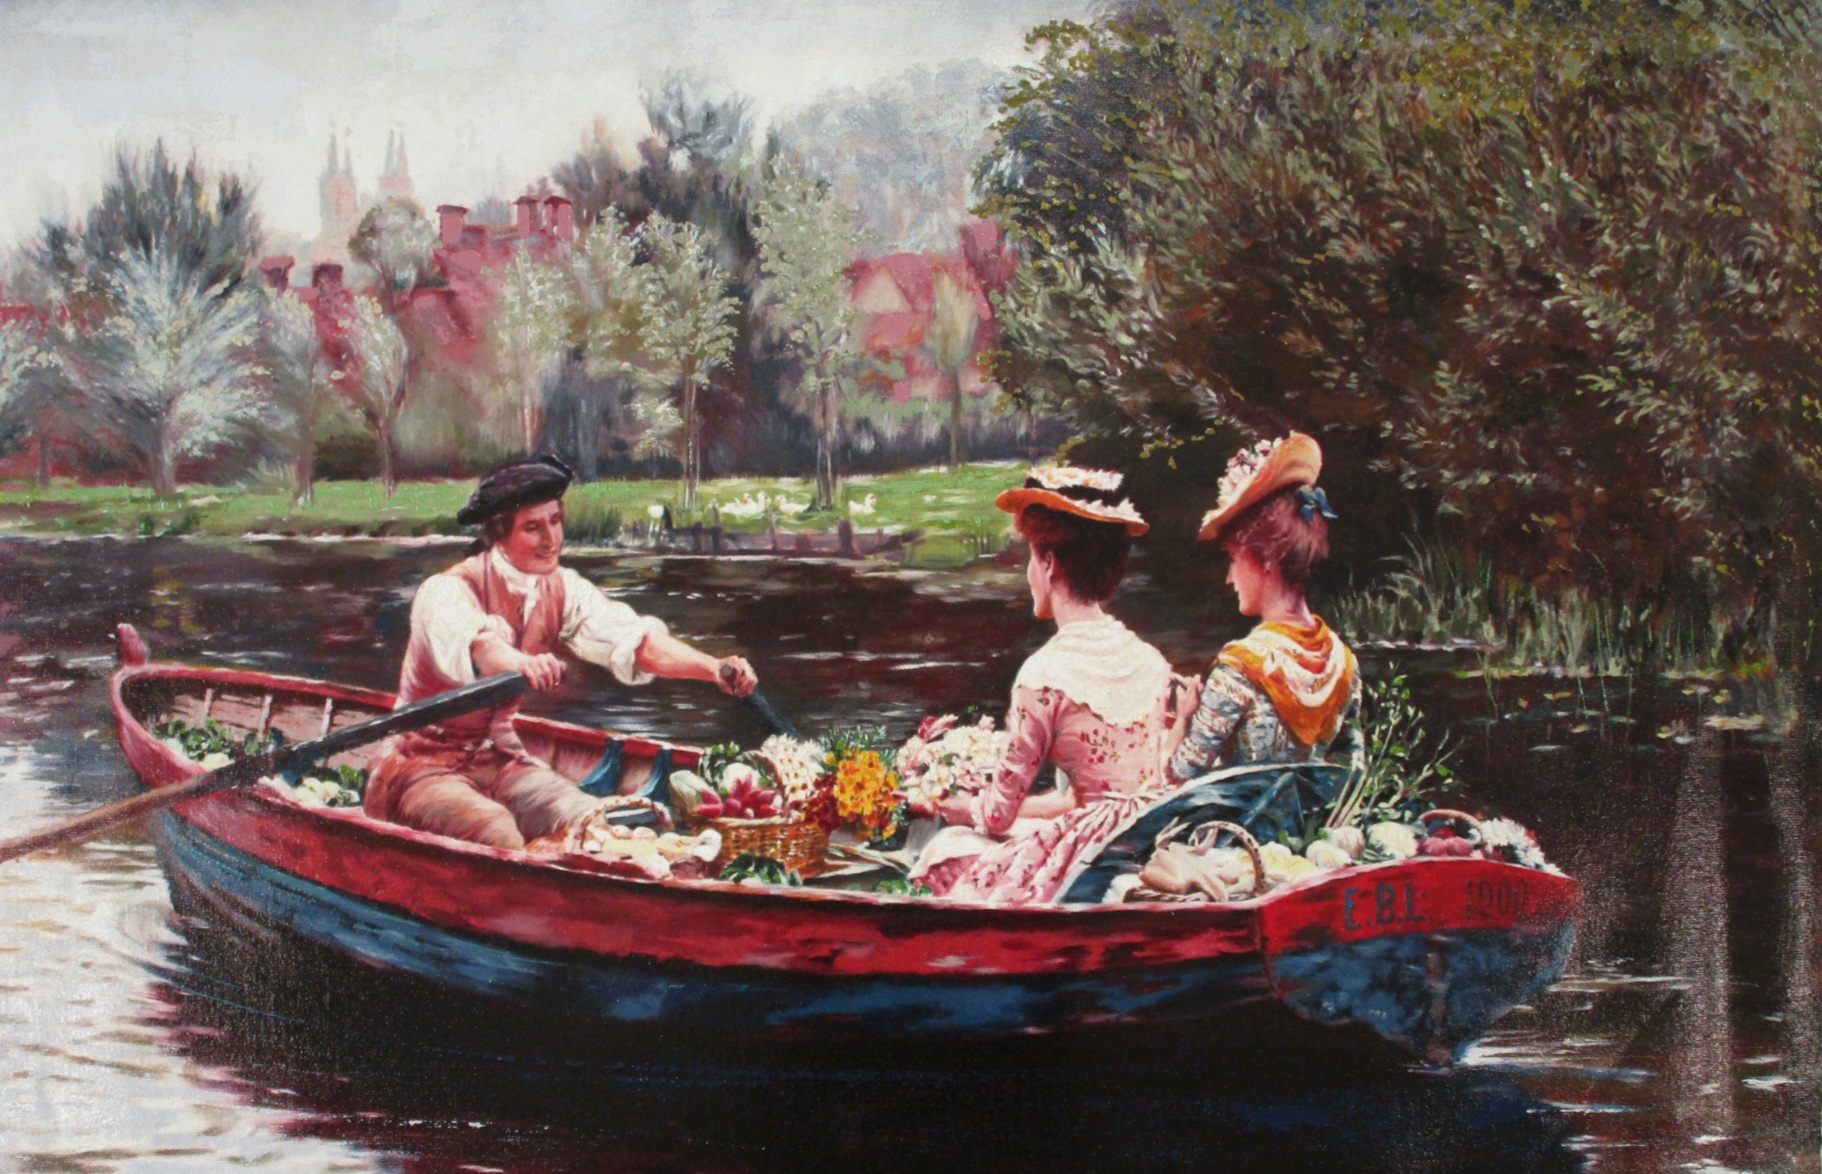 Lovers in a boat